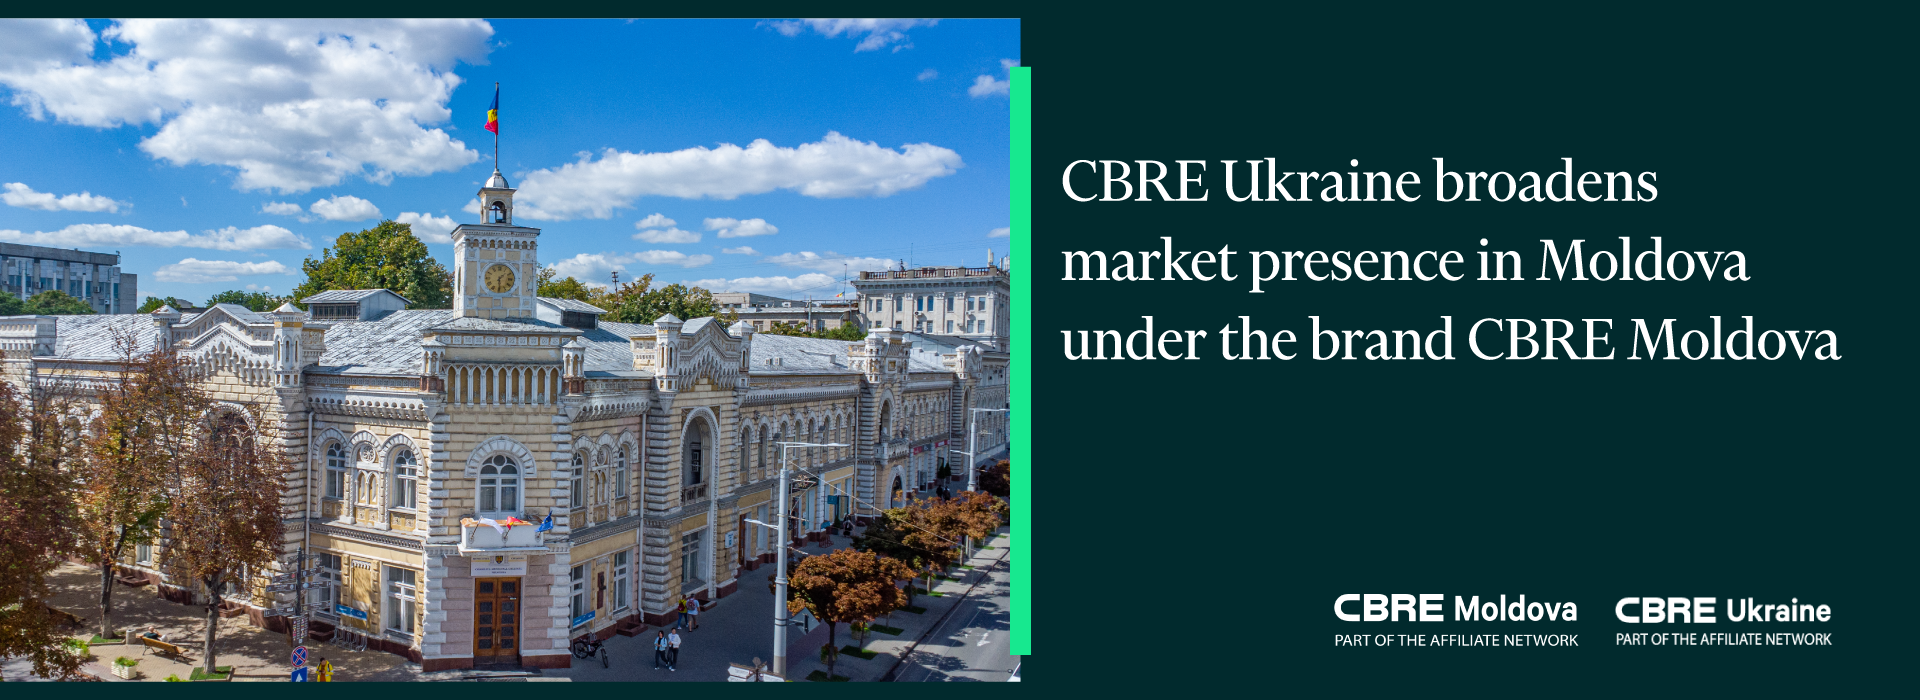 CBRE Ukraine Broadens Market Presence in Moldova Under the Brand CBRE Moldova